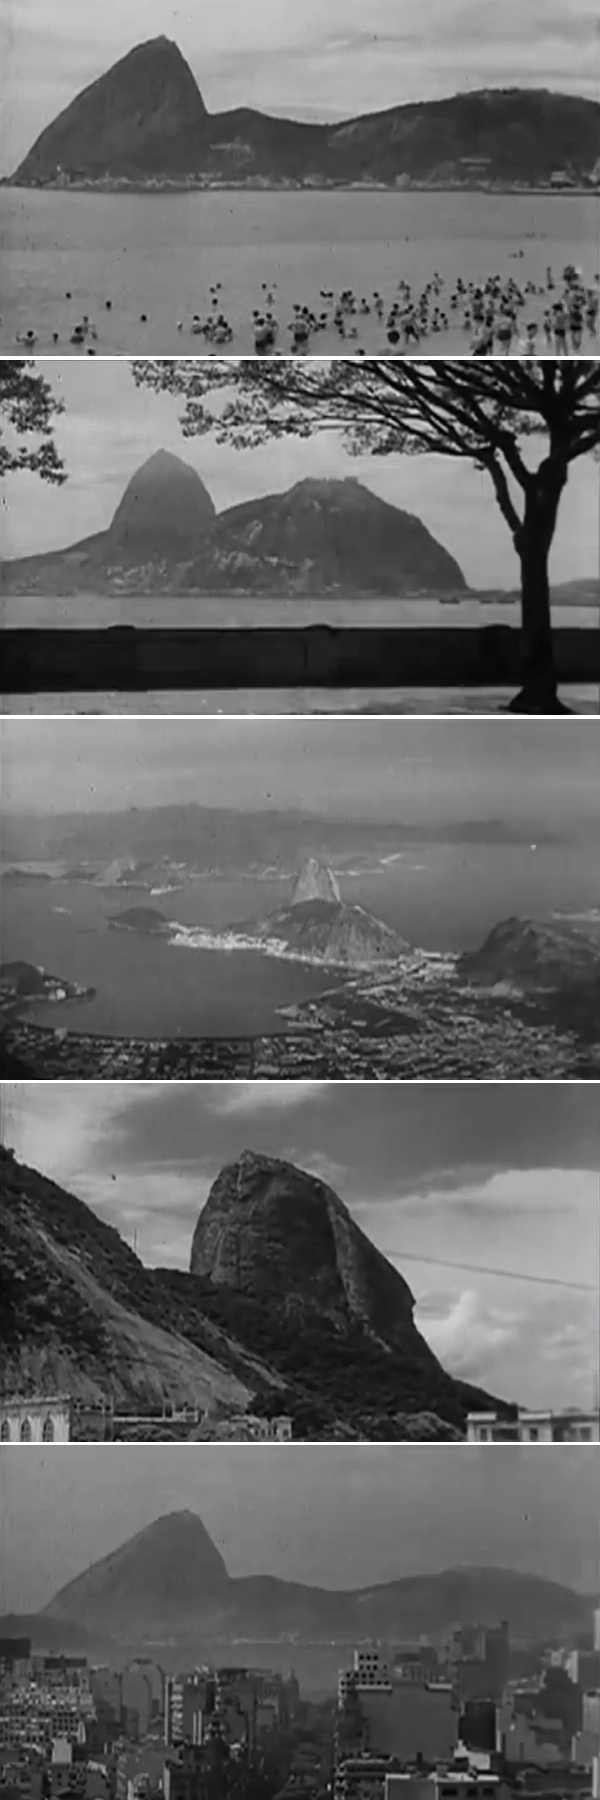 Fotogramas do filme The Screen Traveller sobre o Rio de Janeiro